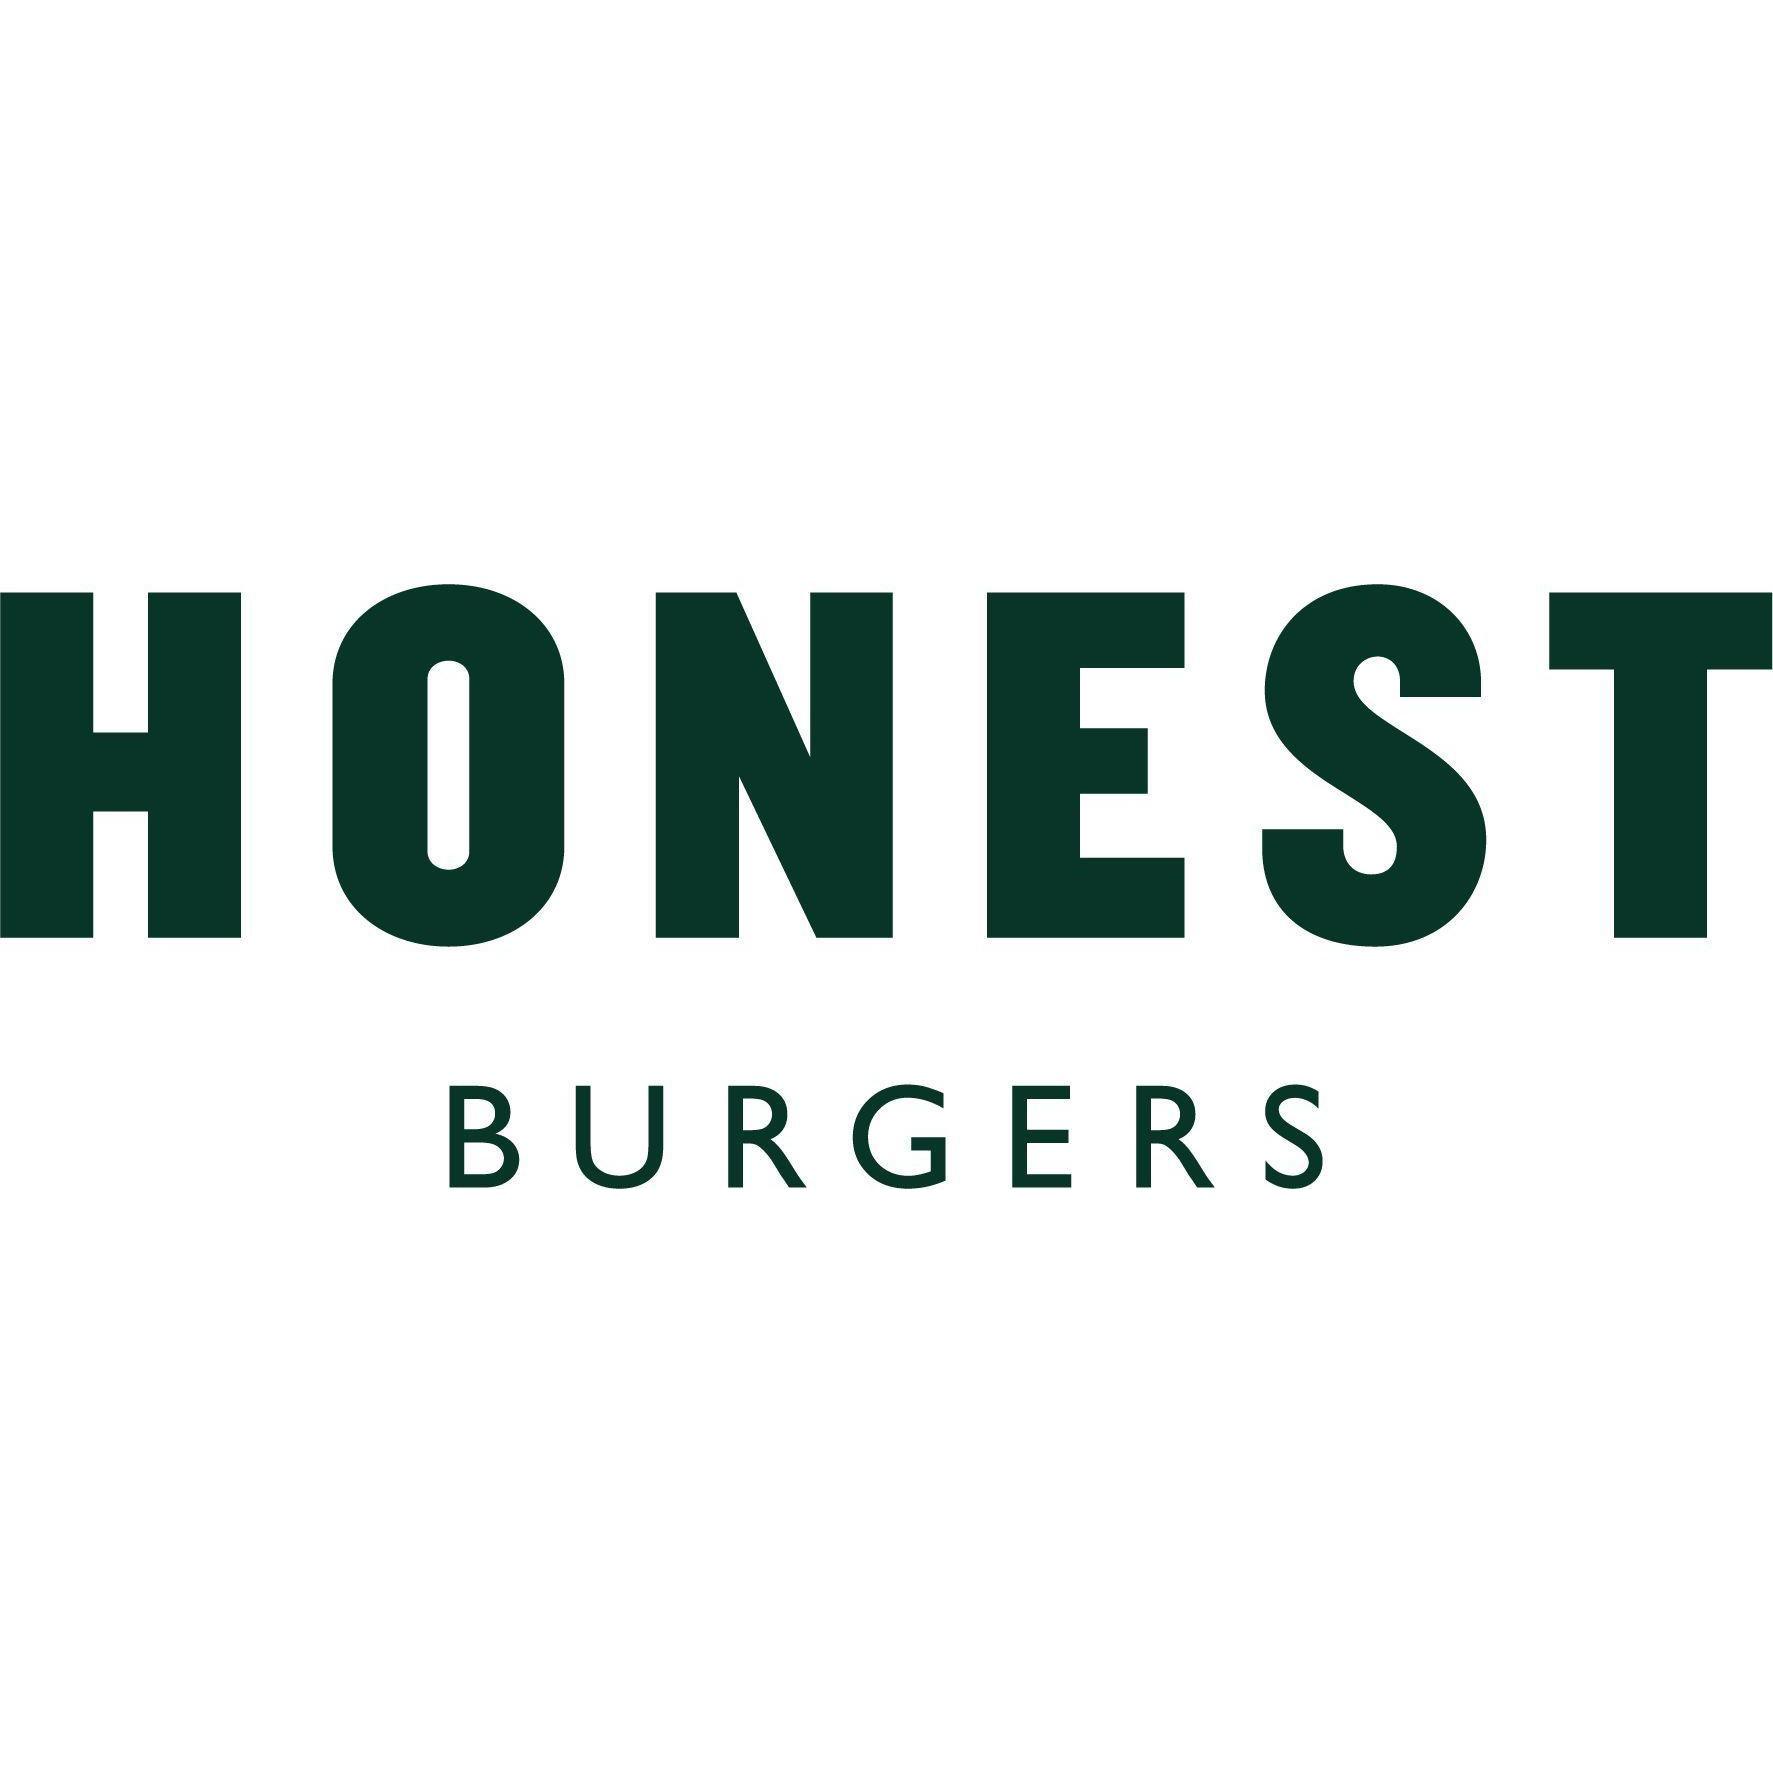 Honest Burgers Portobello - London, London W11 2ED - 020 8154 2095 | ShowMeLocal.com